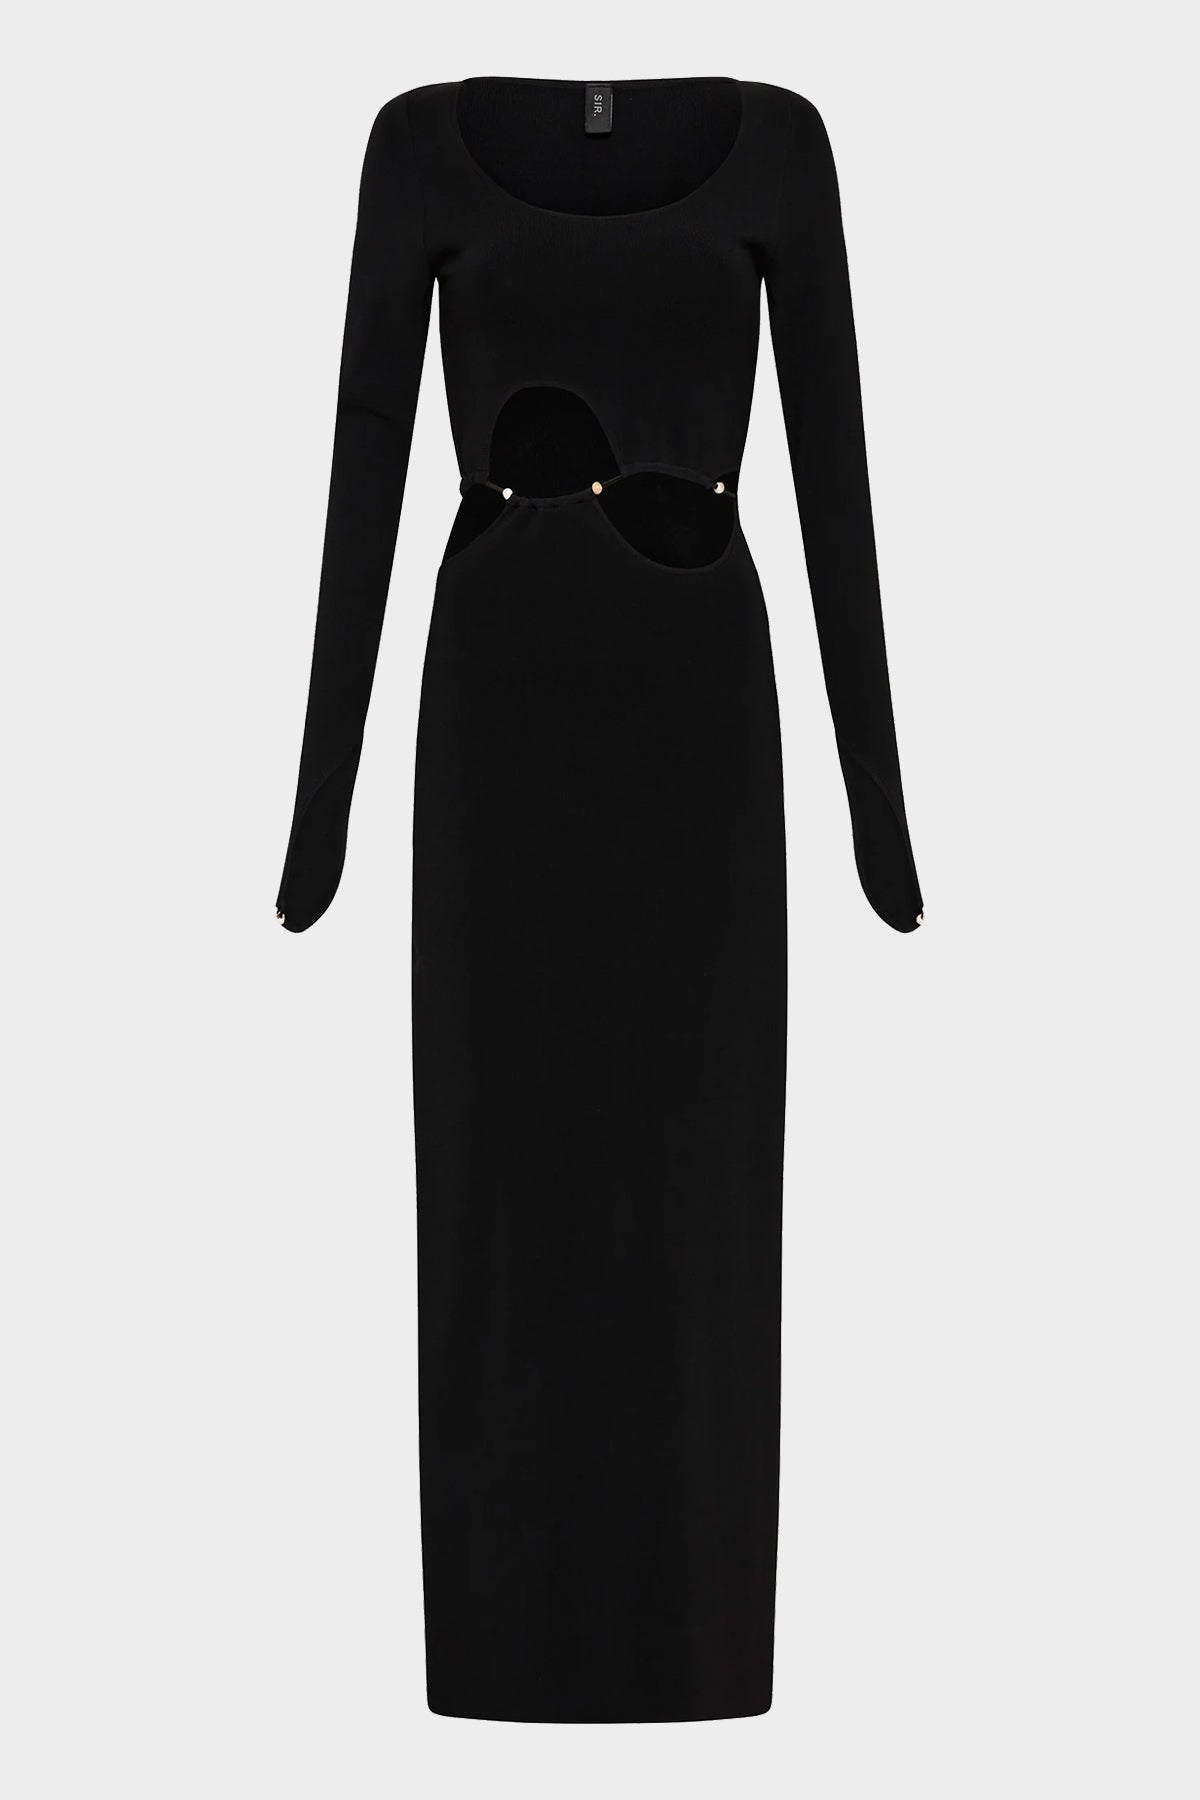 Salvador Beaded Long Sleeve Dress in Black - shop-olivia.com